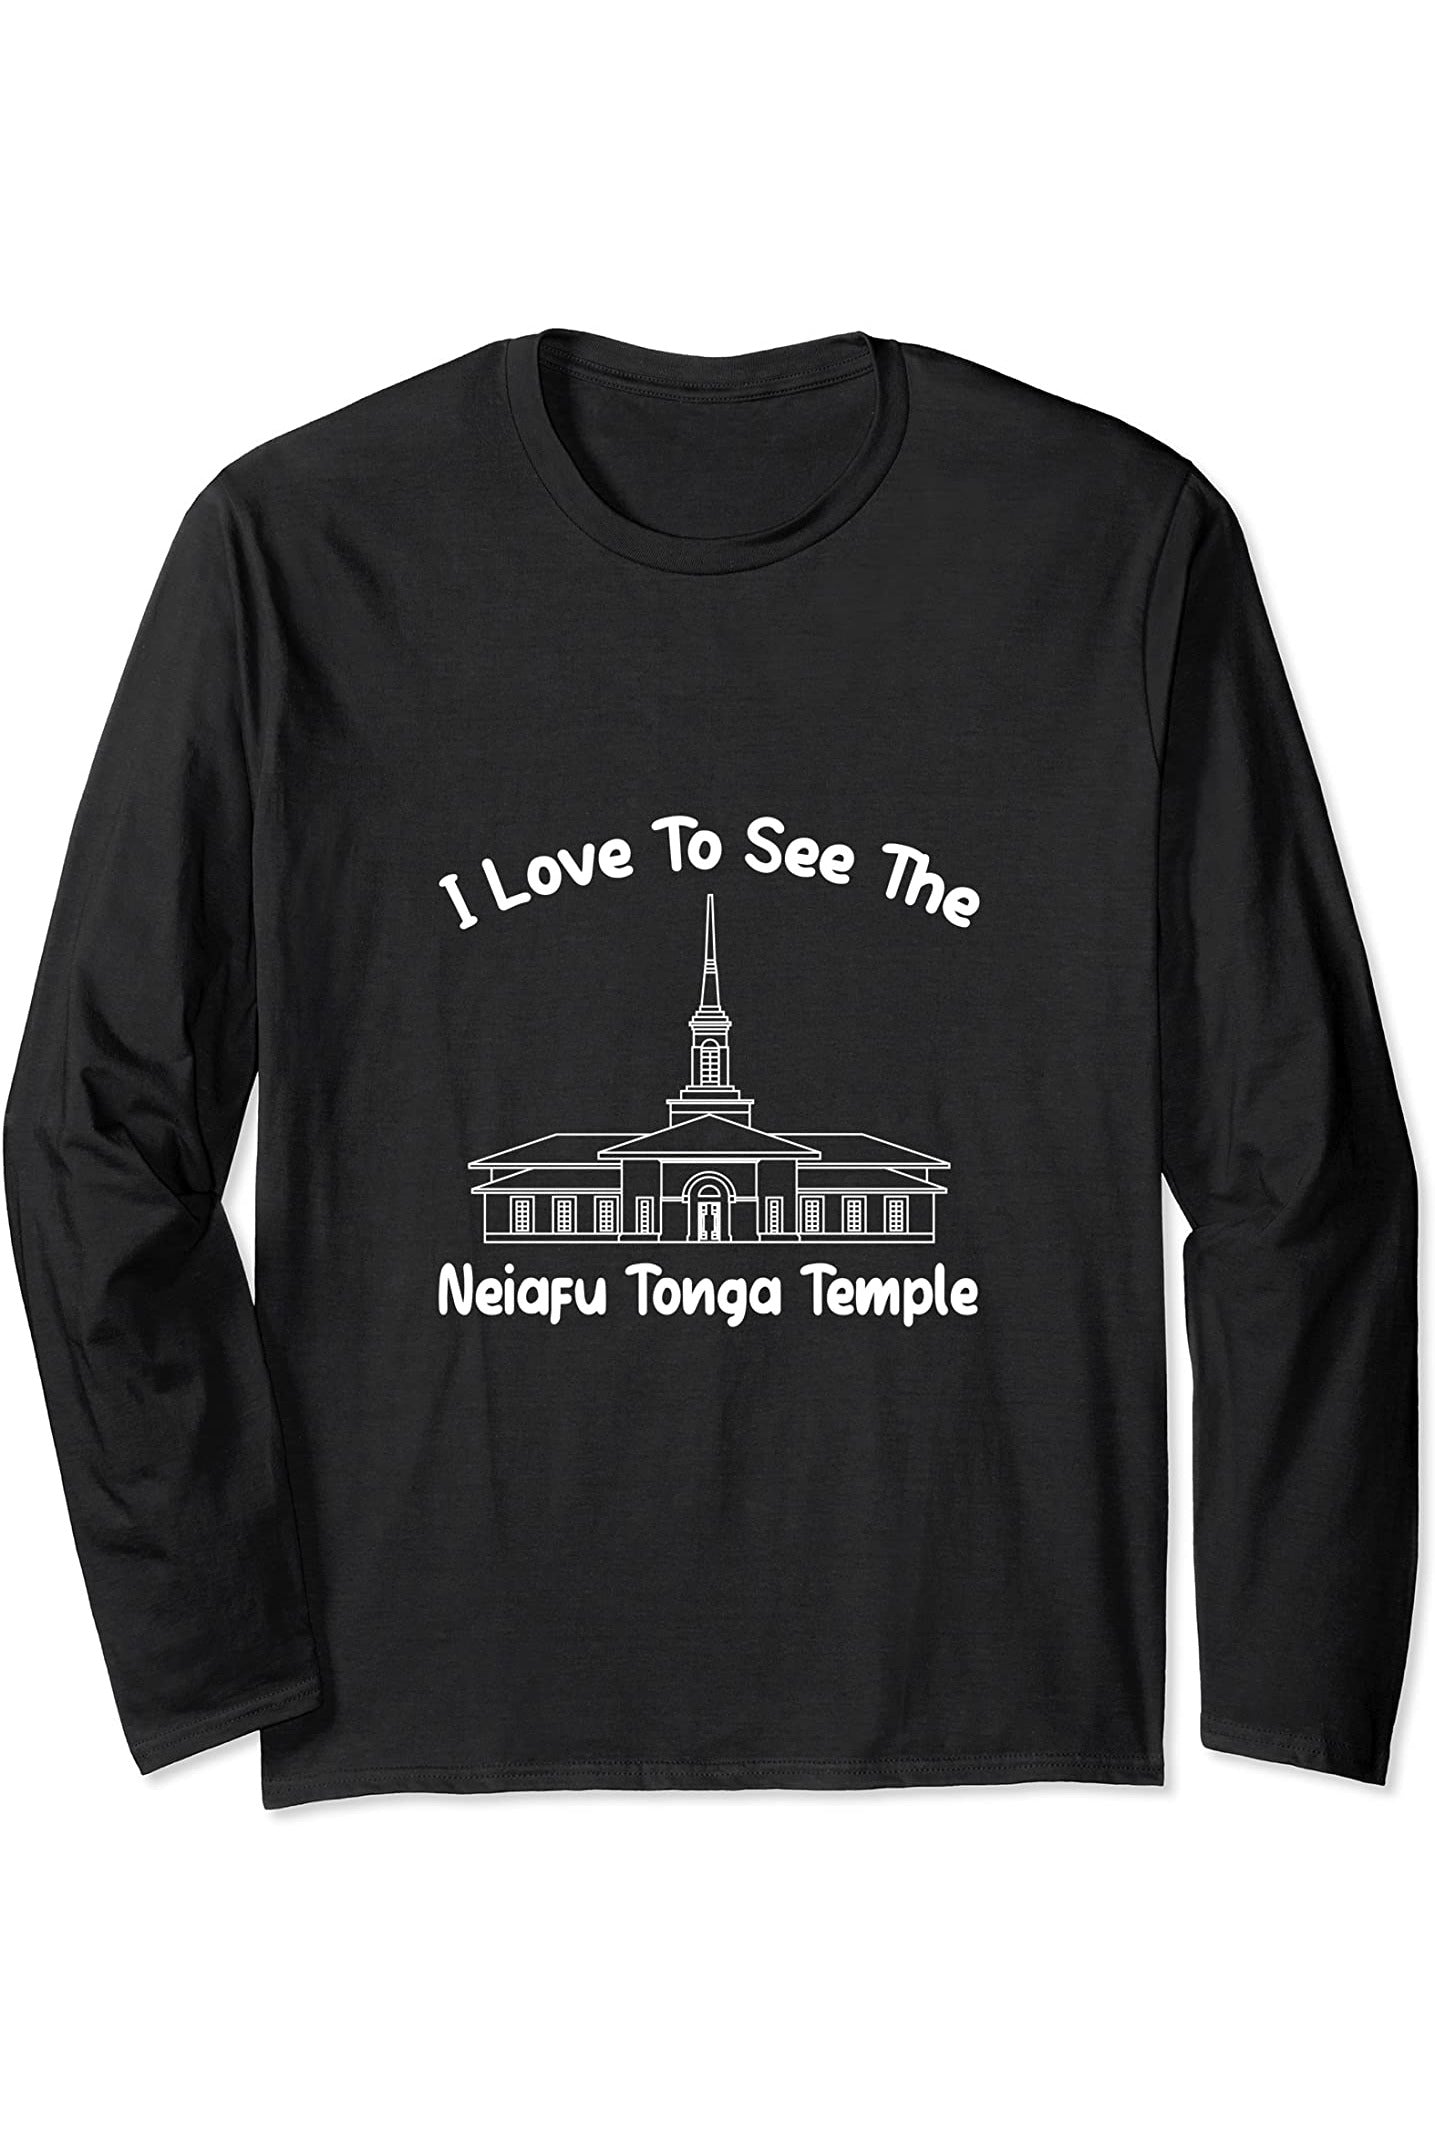 Neiafu Tonga Temple Long Sleeve T-Shirt - Primary Style (English) US